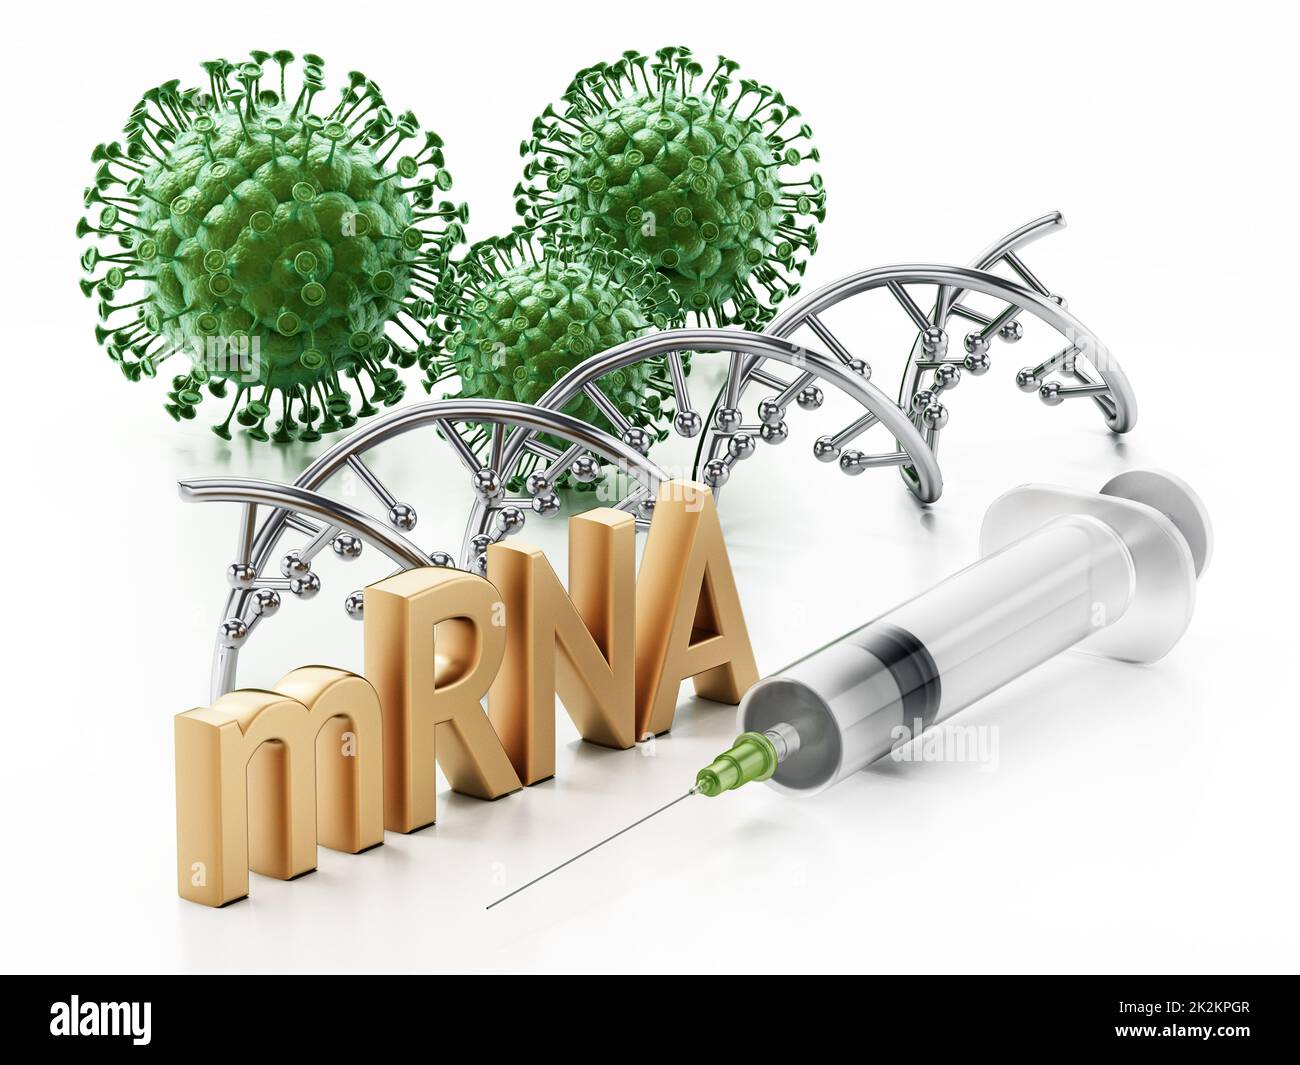 DNA model, syringe, virus model and mRNA text isolated on white background. 3D illustration Stock Photo